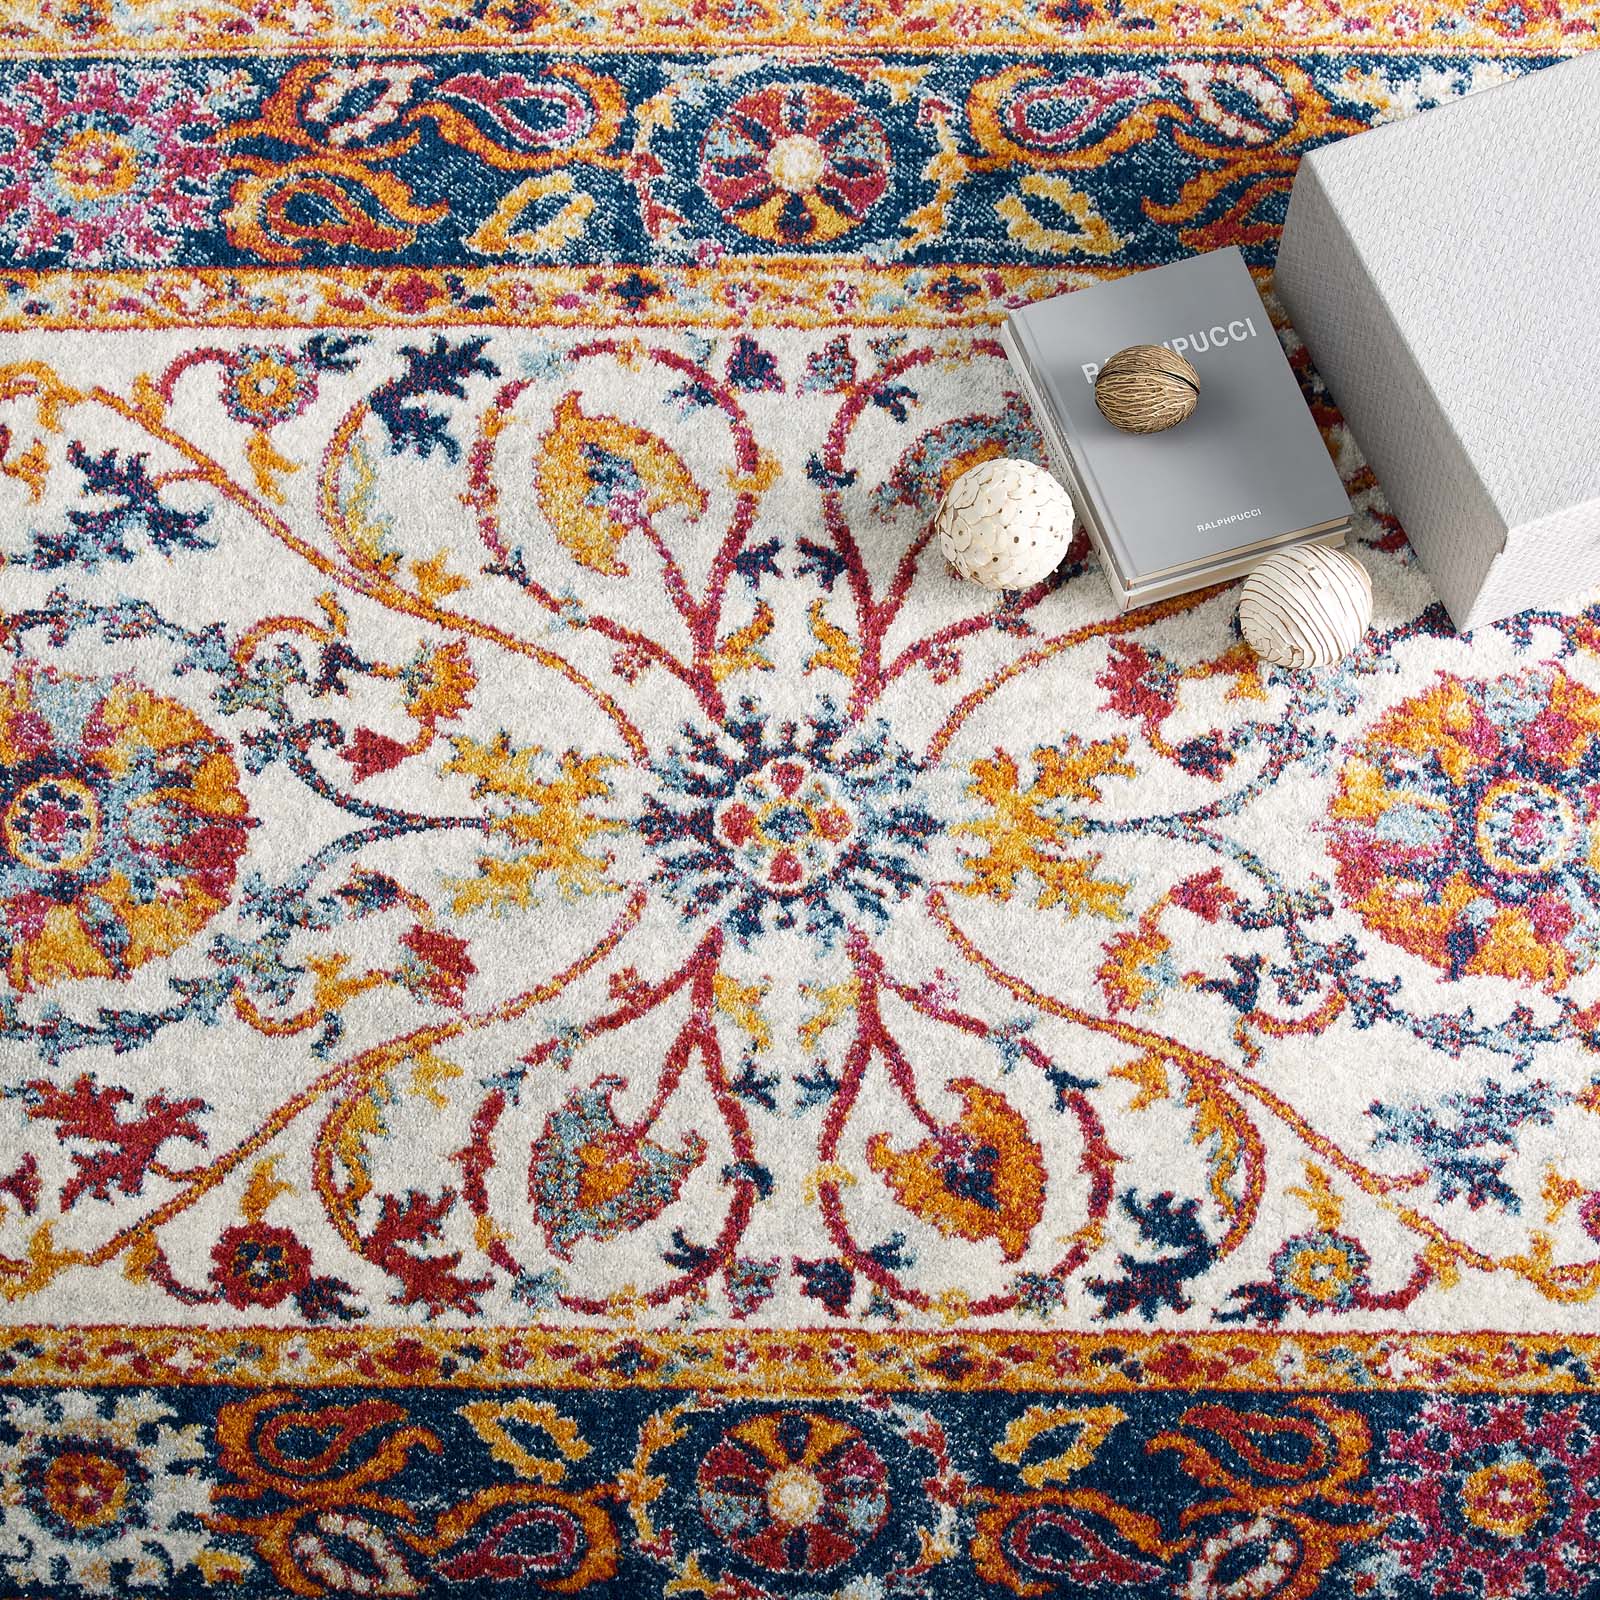 Entourage Samira Distressed Vintage Floral Persian Medallion Area Rug